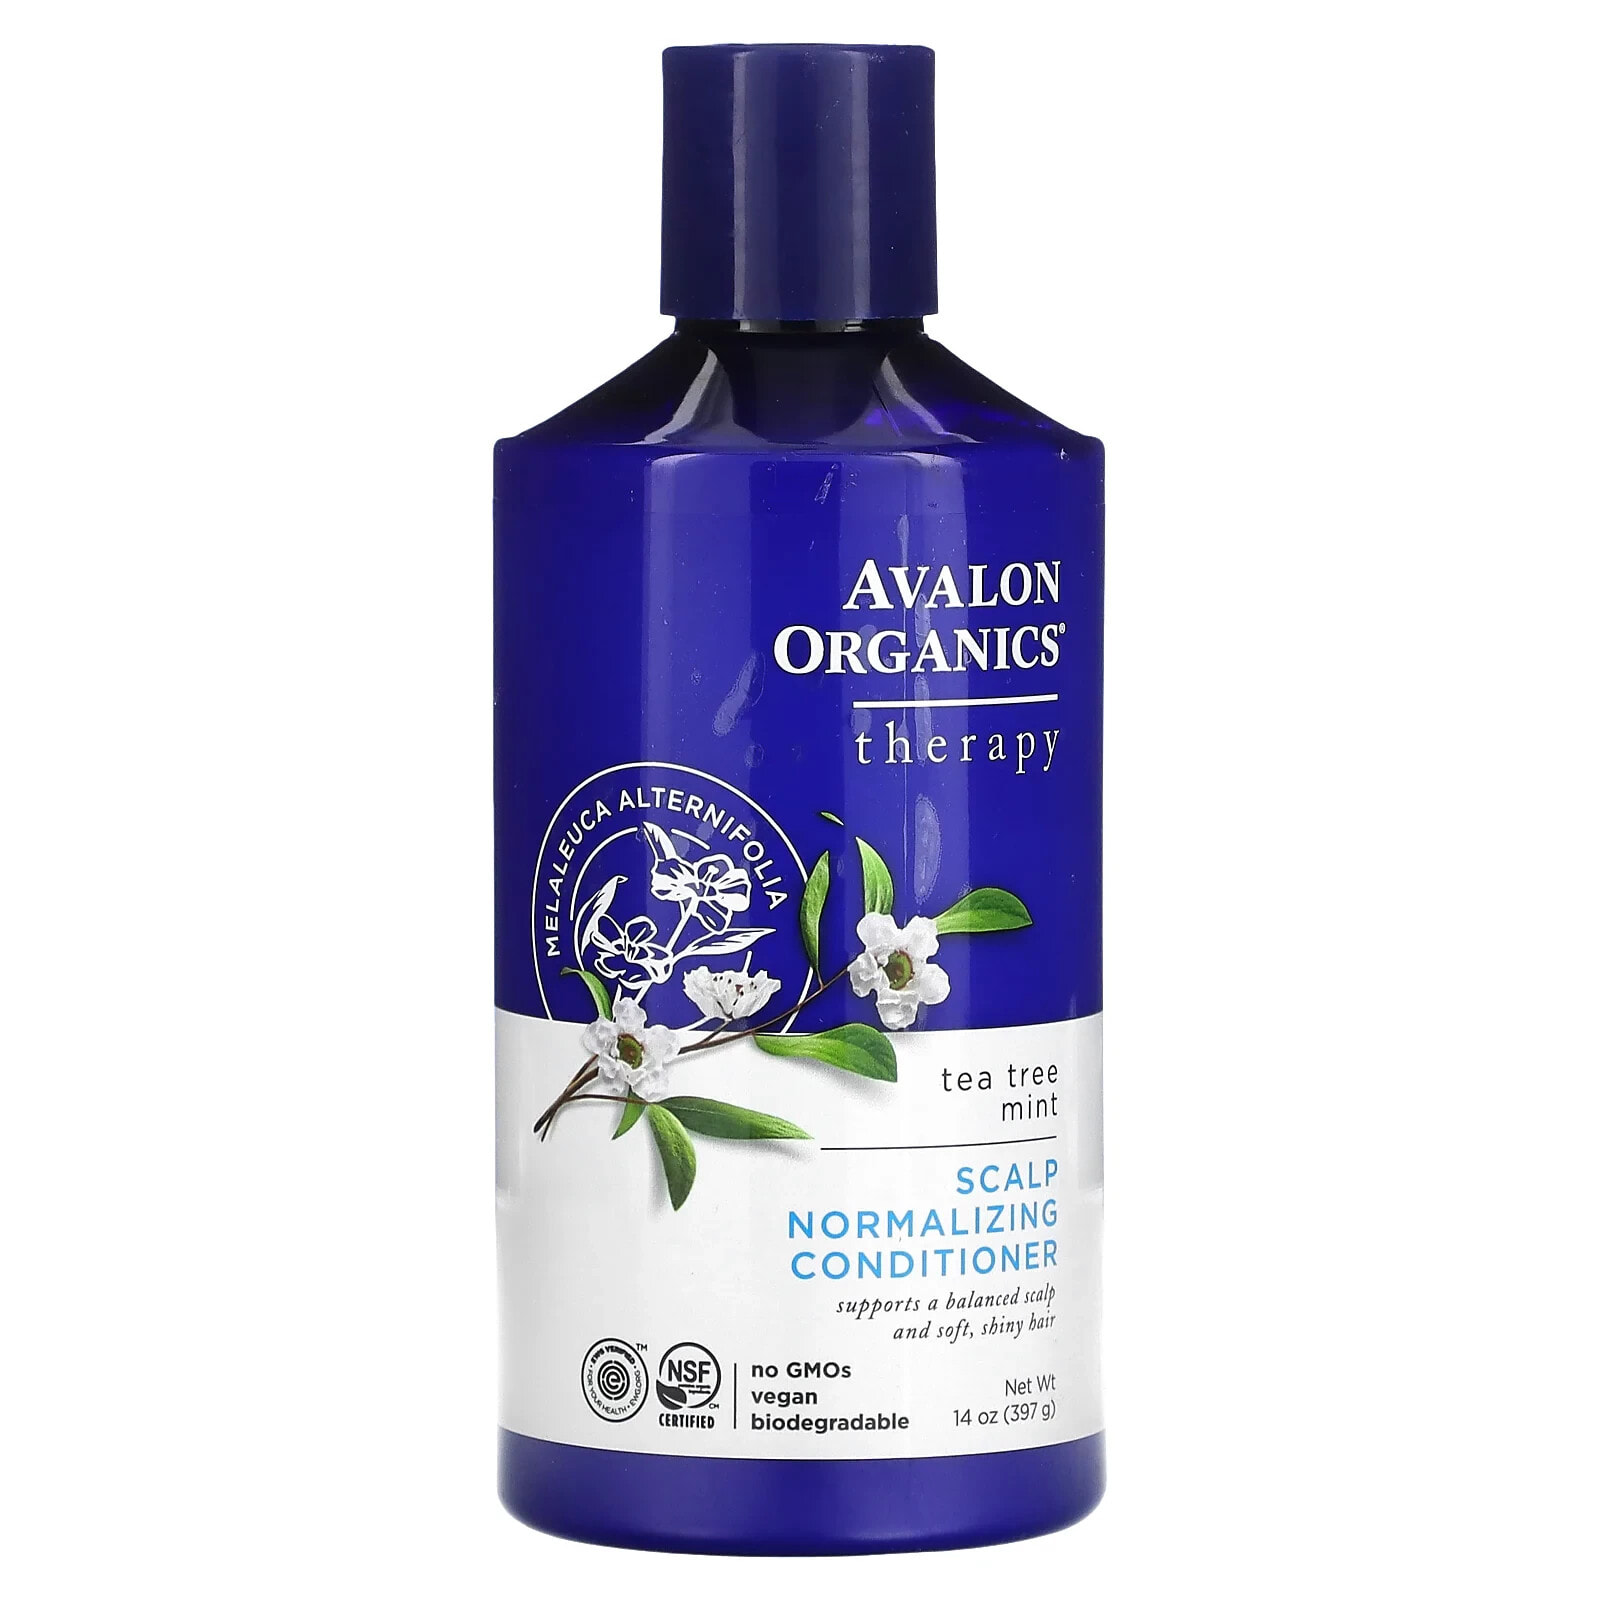 Avalon Organics Scalp Normalizing Conditioner Кондиционер нормализующий кожу головы, уменьшающий зуд и шелушение 397 мл